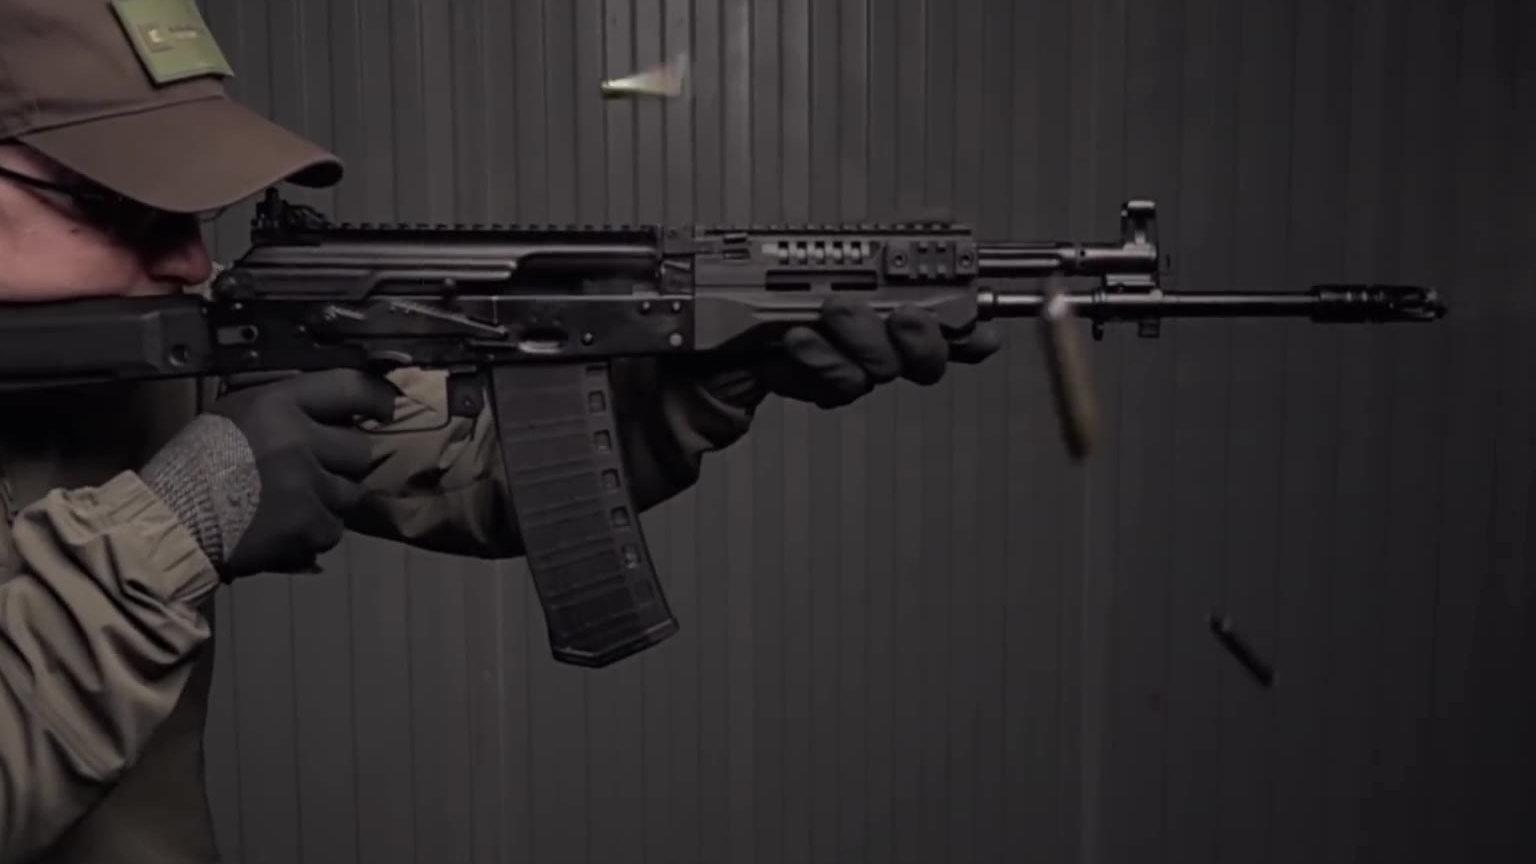 【名枪实弹】new ak-19 assault rifle 实弹射击